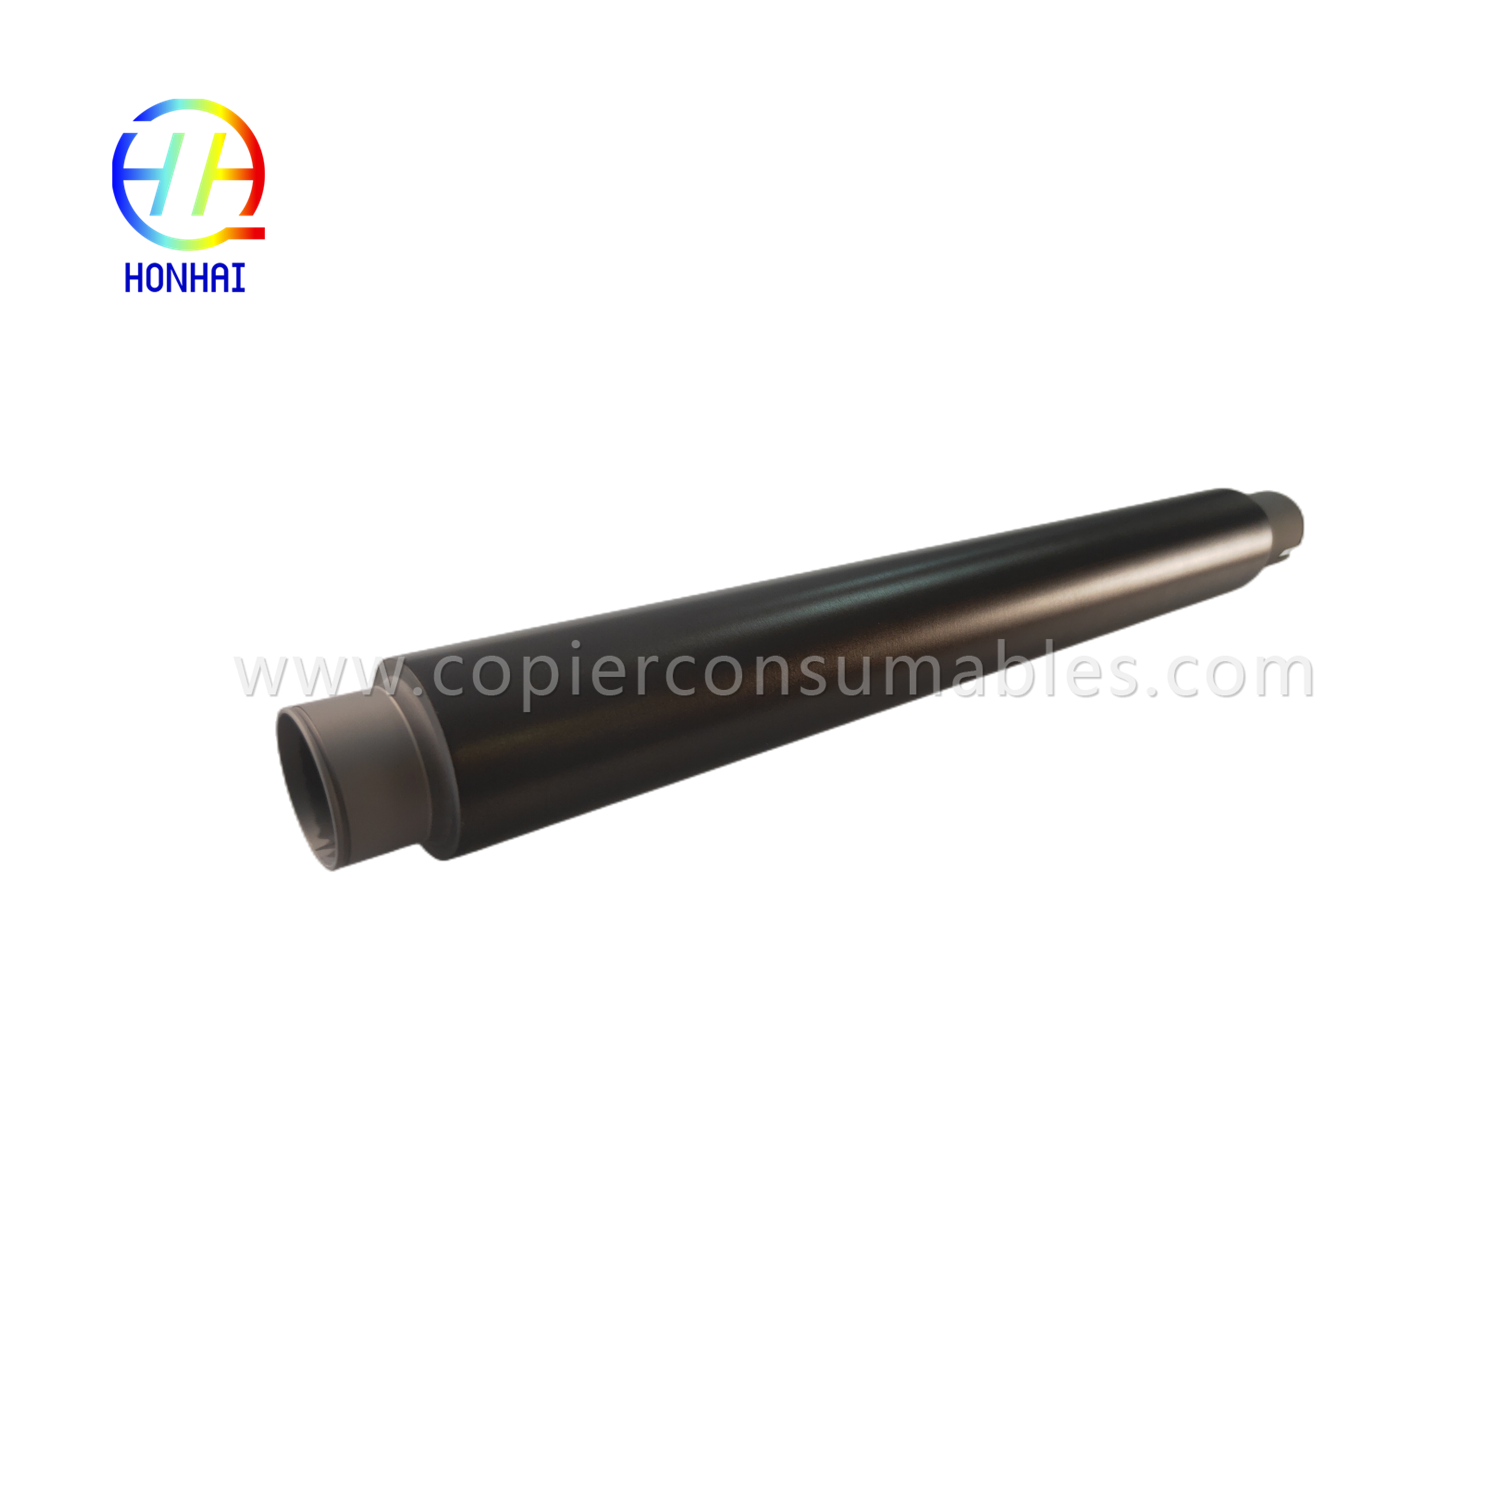 https://www.copierconsumables.com/upper-fuser-roller-for-sharp-mxm465-565-product/